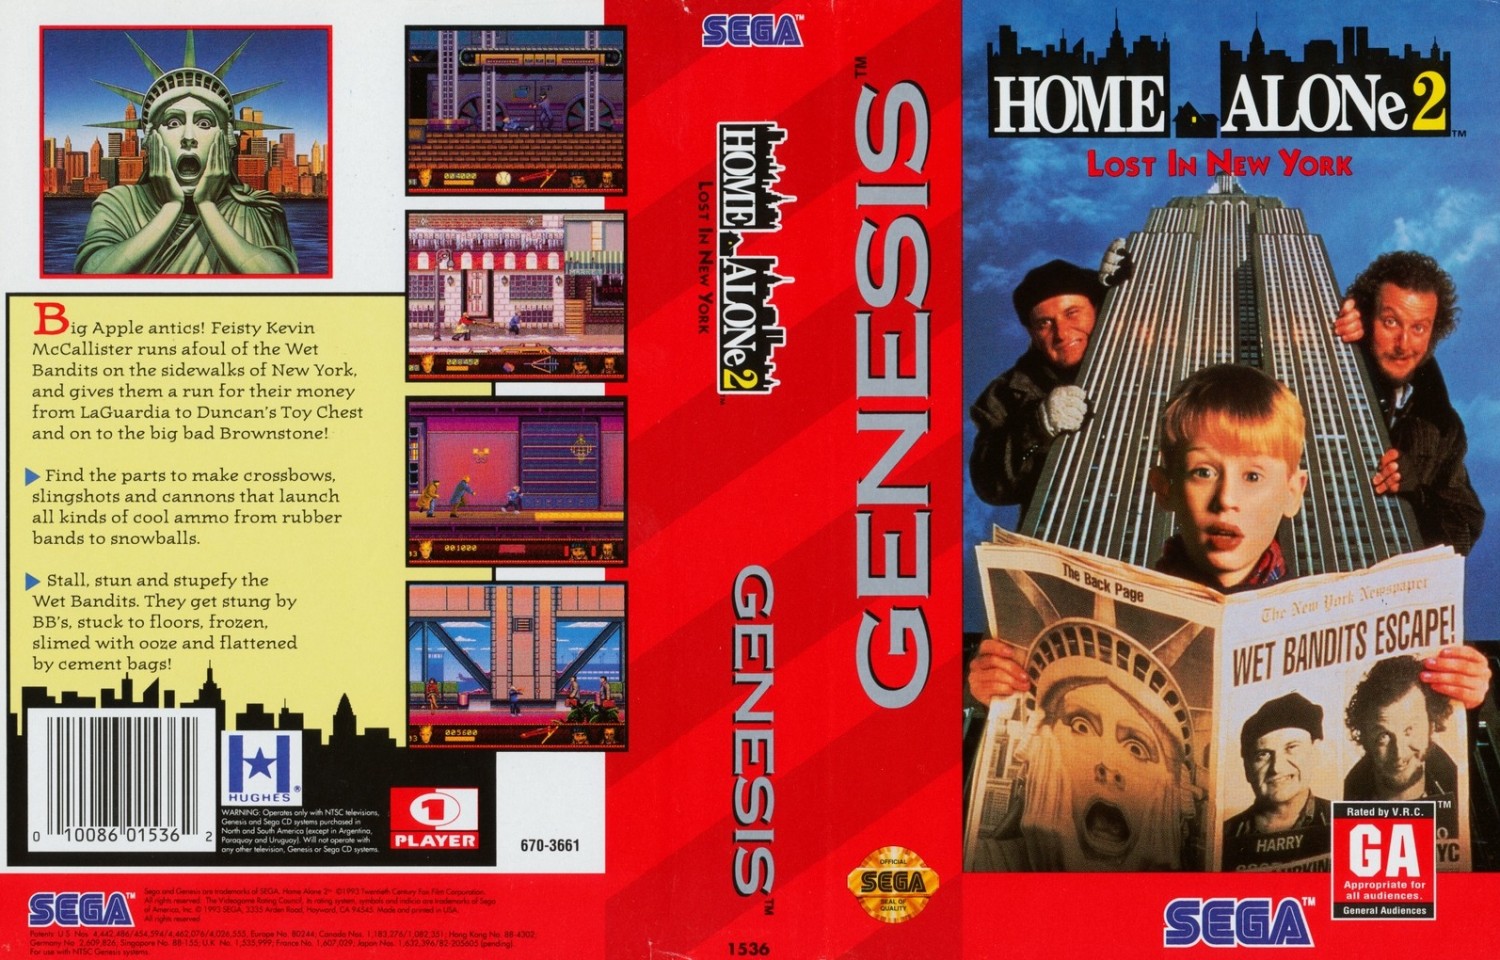 Игра один дома 2. Home Alone 2 Lost in New York Sega. Home Alone 2 картридж сега. Home Alone 2 Sega обложка. Sega Home Alone 2 New game.